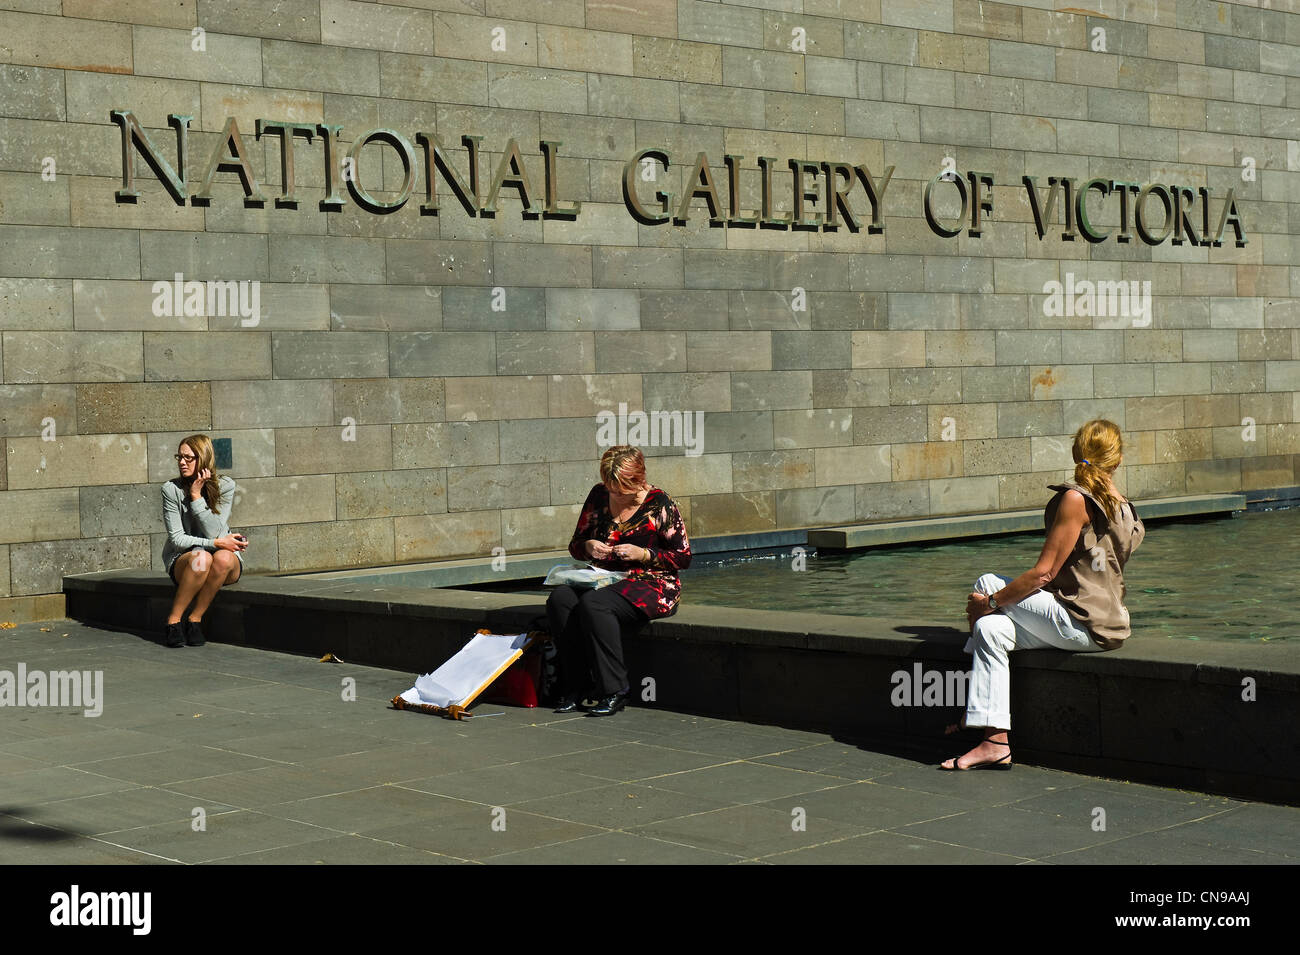 Australien, Victoria, Melbourne, National Gallery of Victoria Eingang Stockfoto